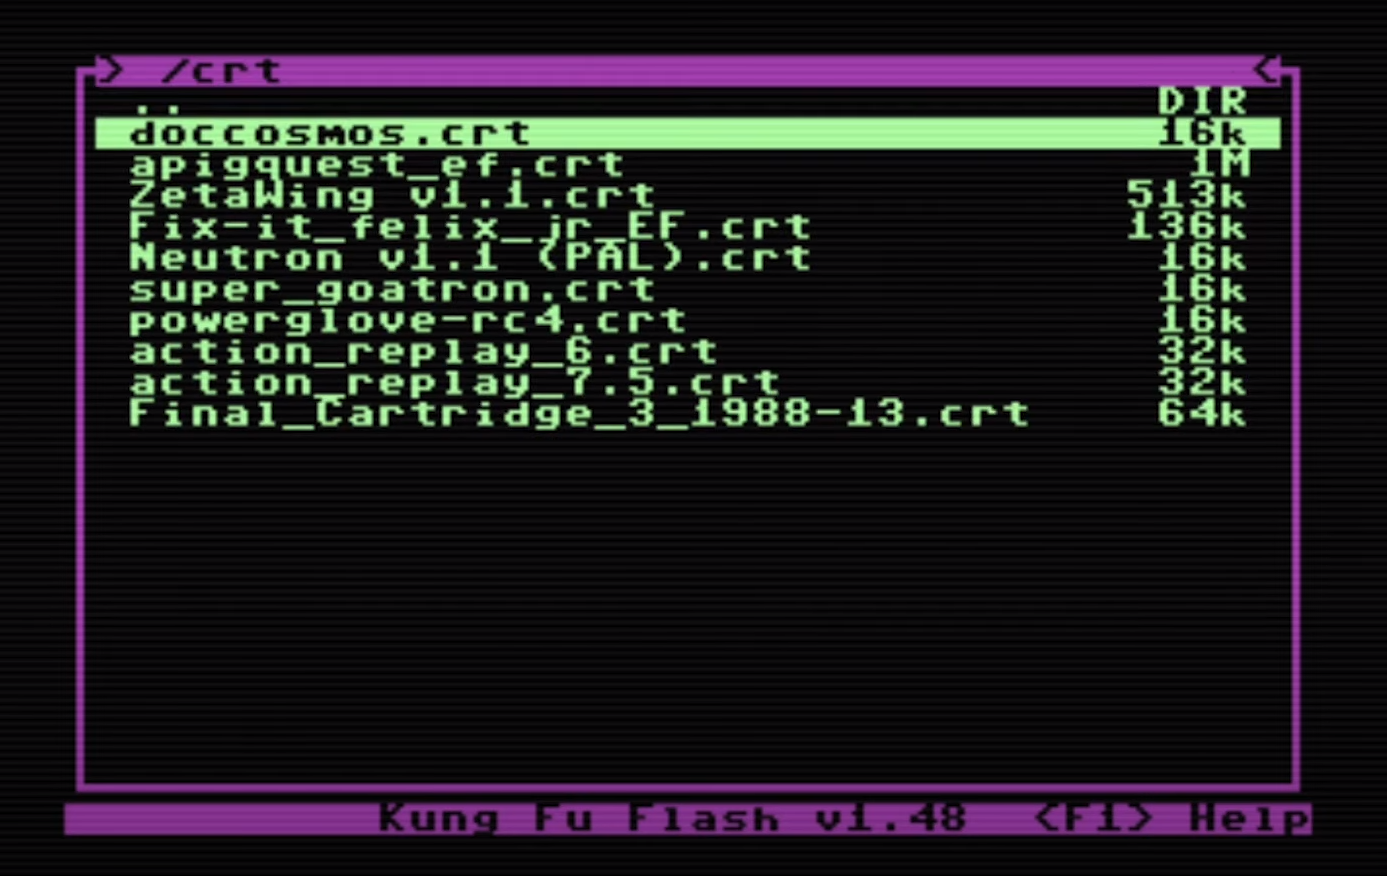 Screenshot of Kung Fu Flash software running on C64